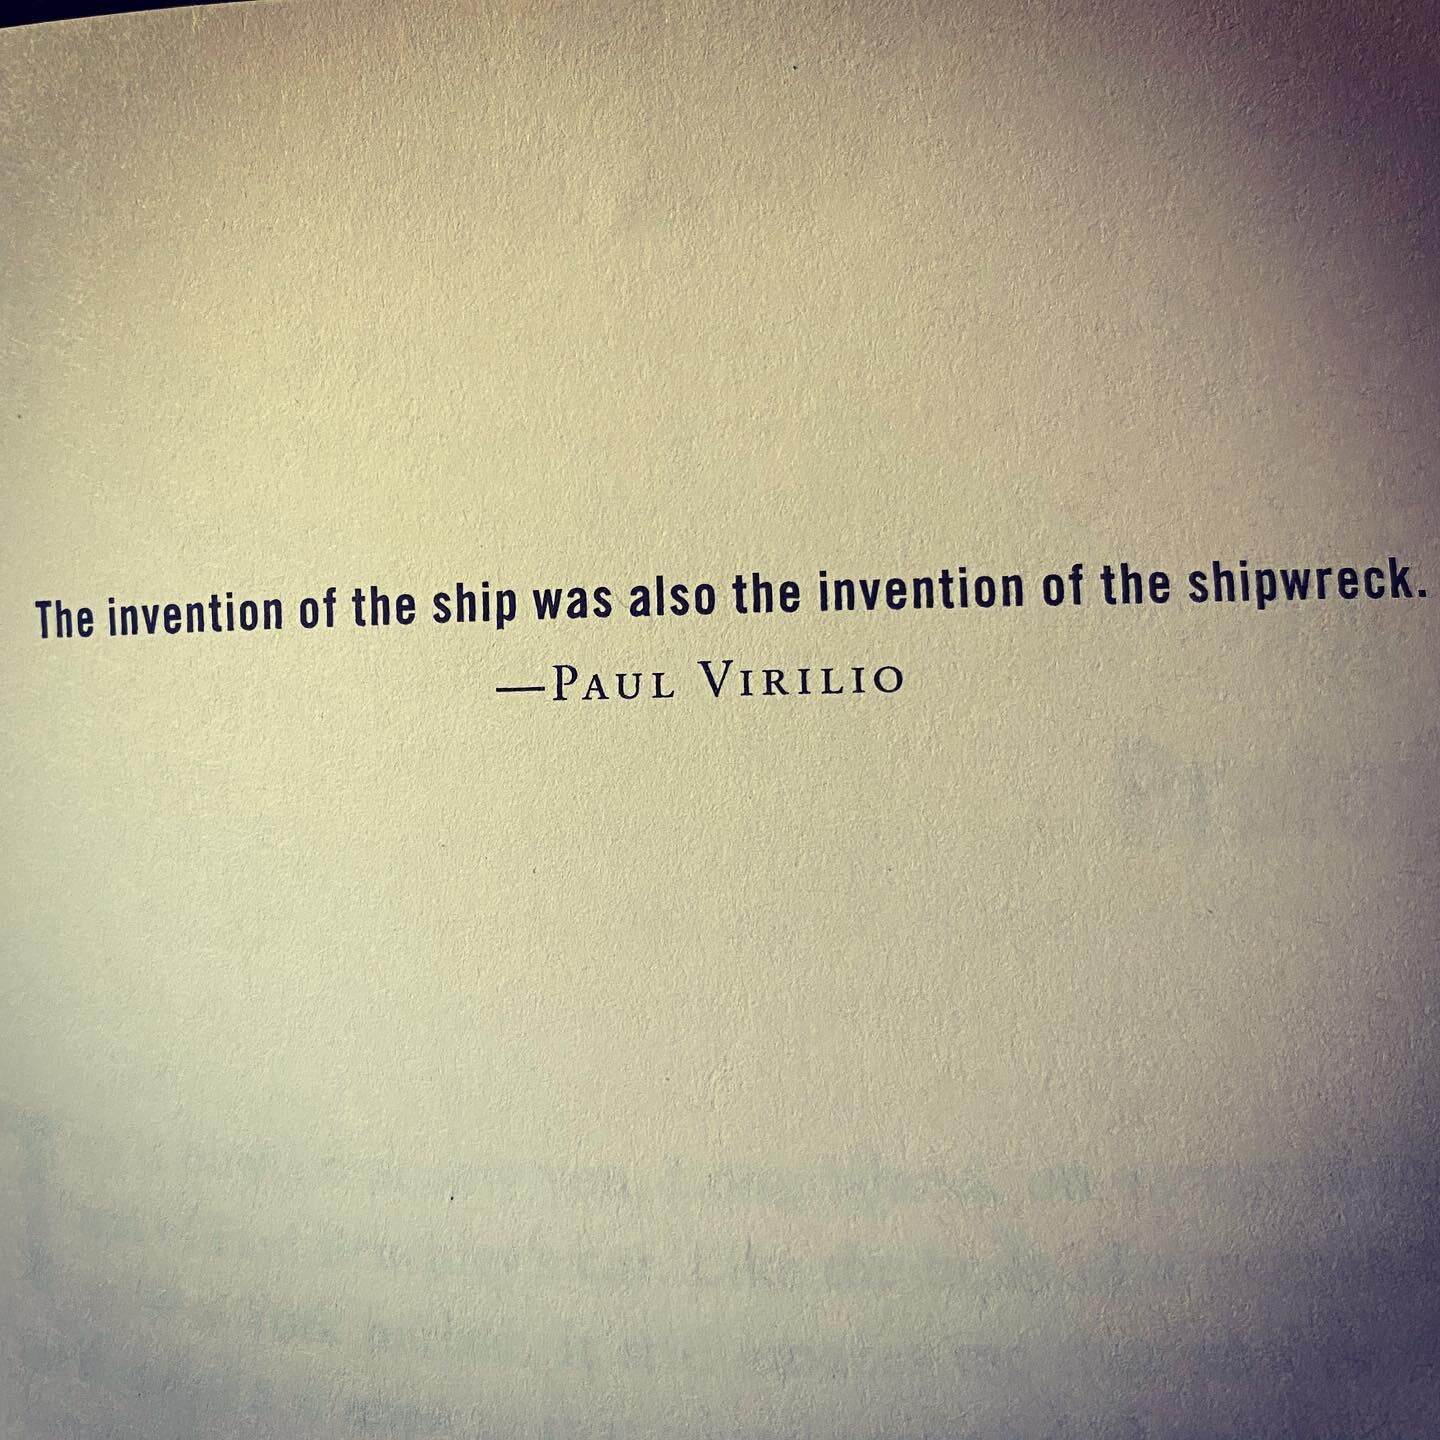 Brilliant epigraph to Christopher Bollen&rsquo;s ORIENT... #orient #orientny #christopherbollen #literarythriller #paulvirilio #shipwreck @christbollen @harperperennial